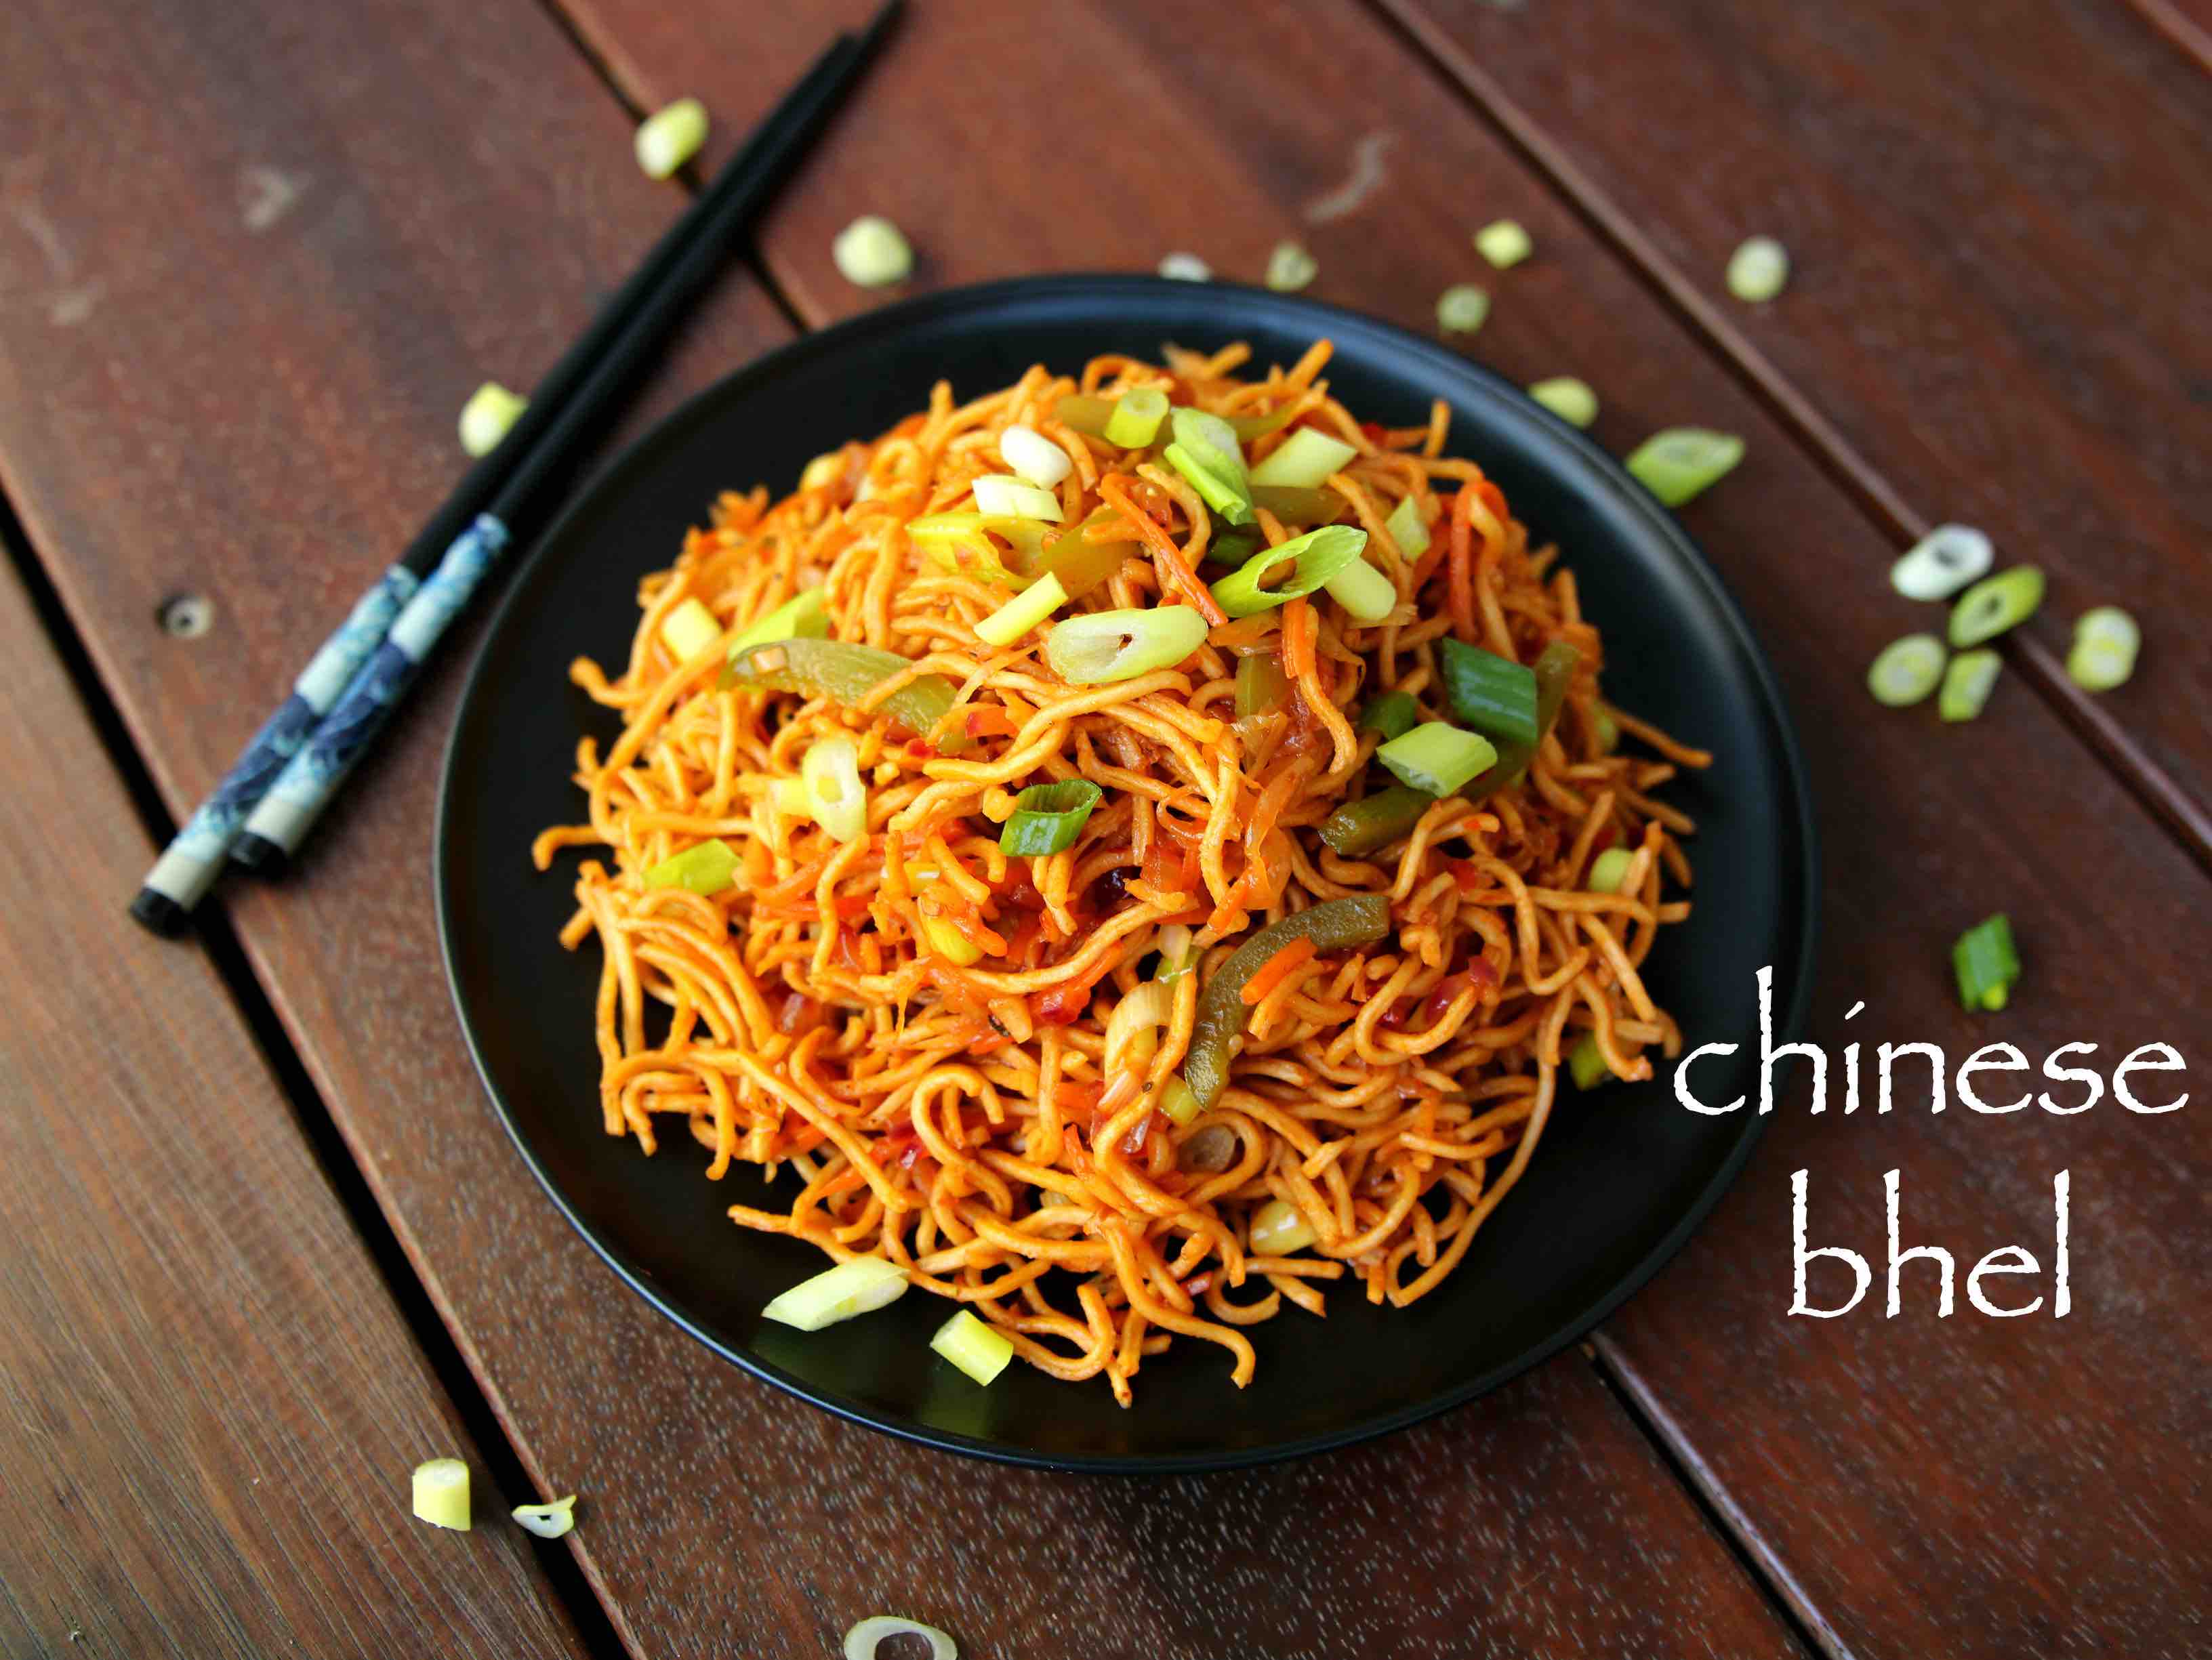 chinese bhel recipe crispy noodle salad how to make